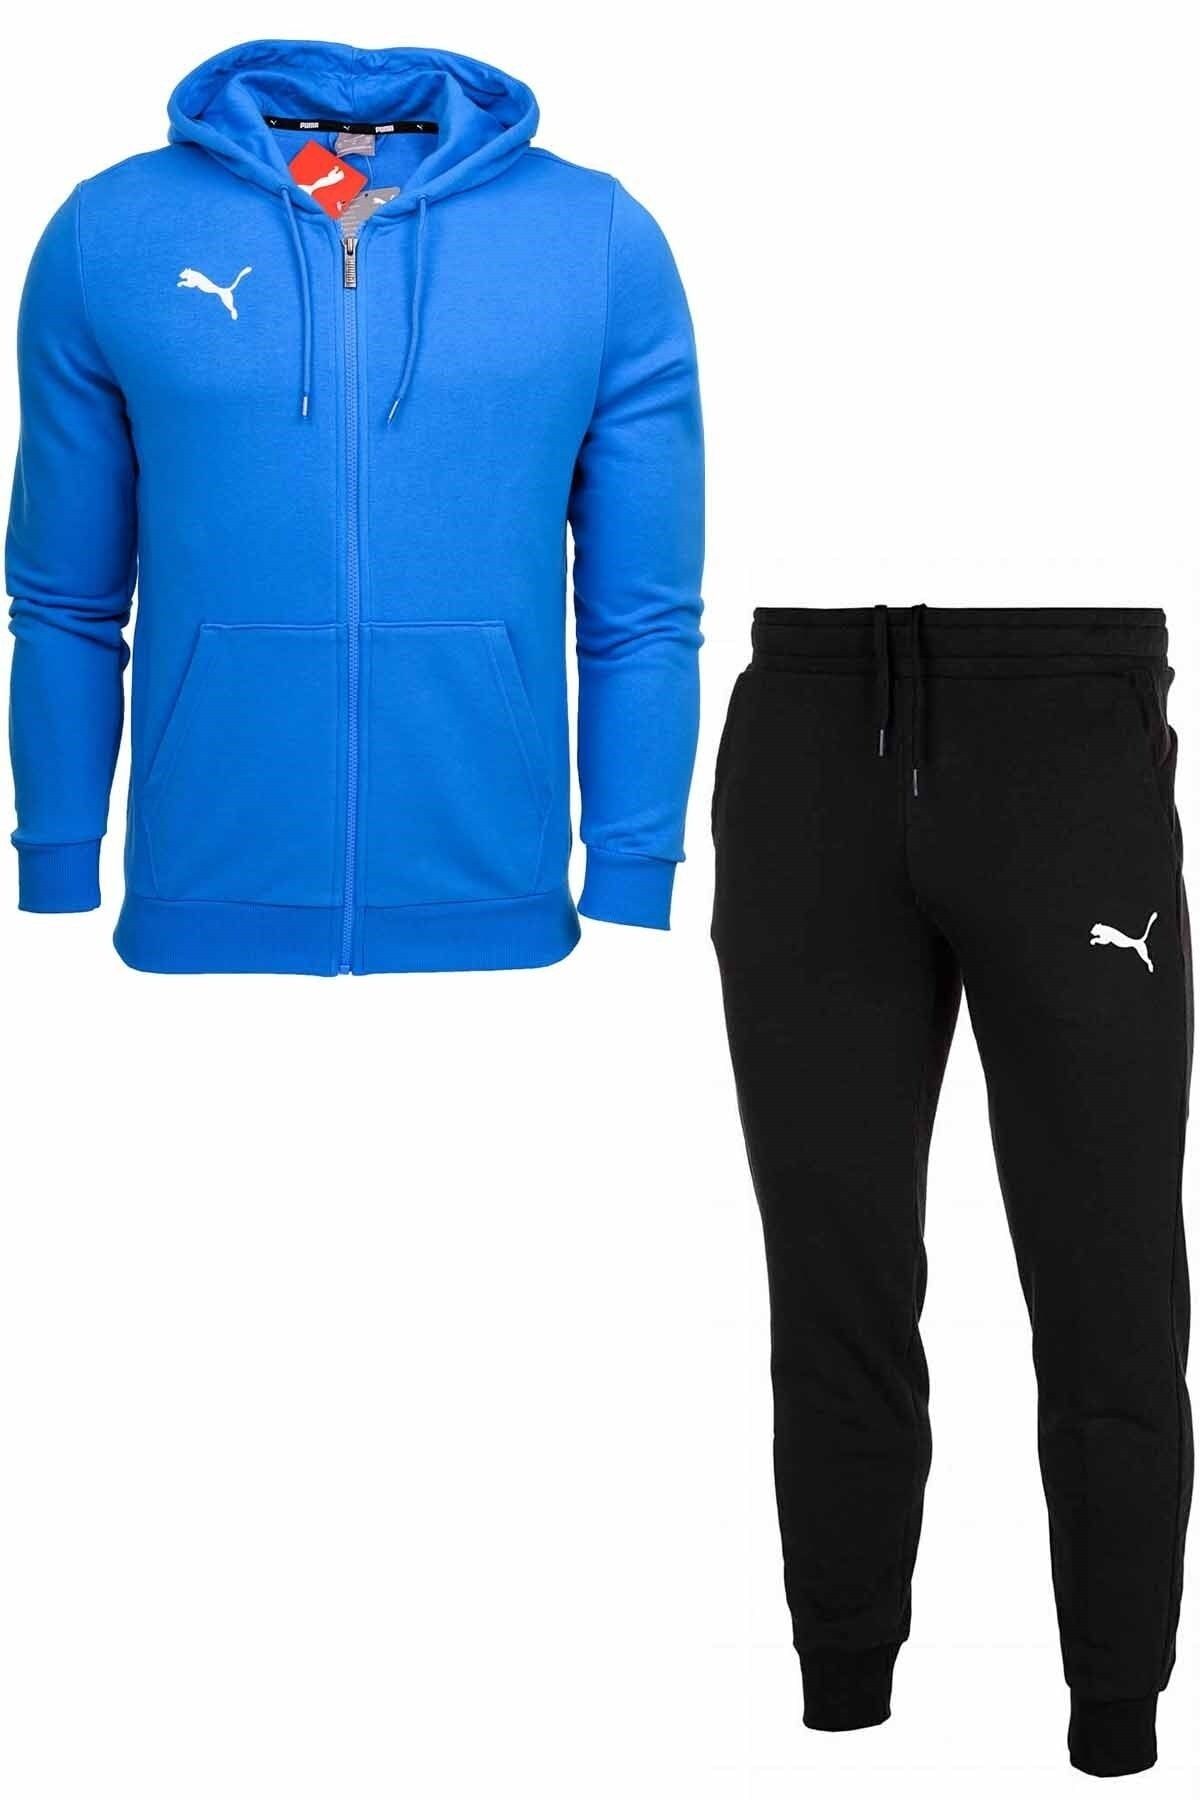 Puma Pamuklu Alt Sweatshirt Erkek Eşofman Takım Pmr1005 Mavi